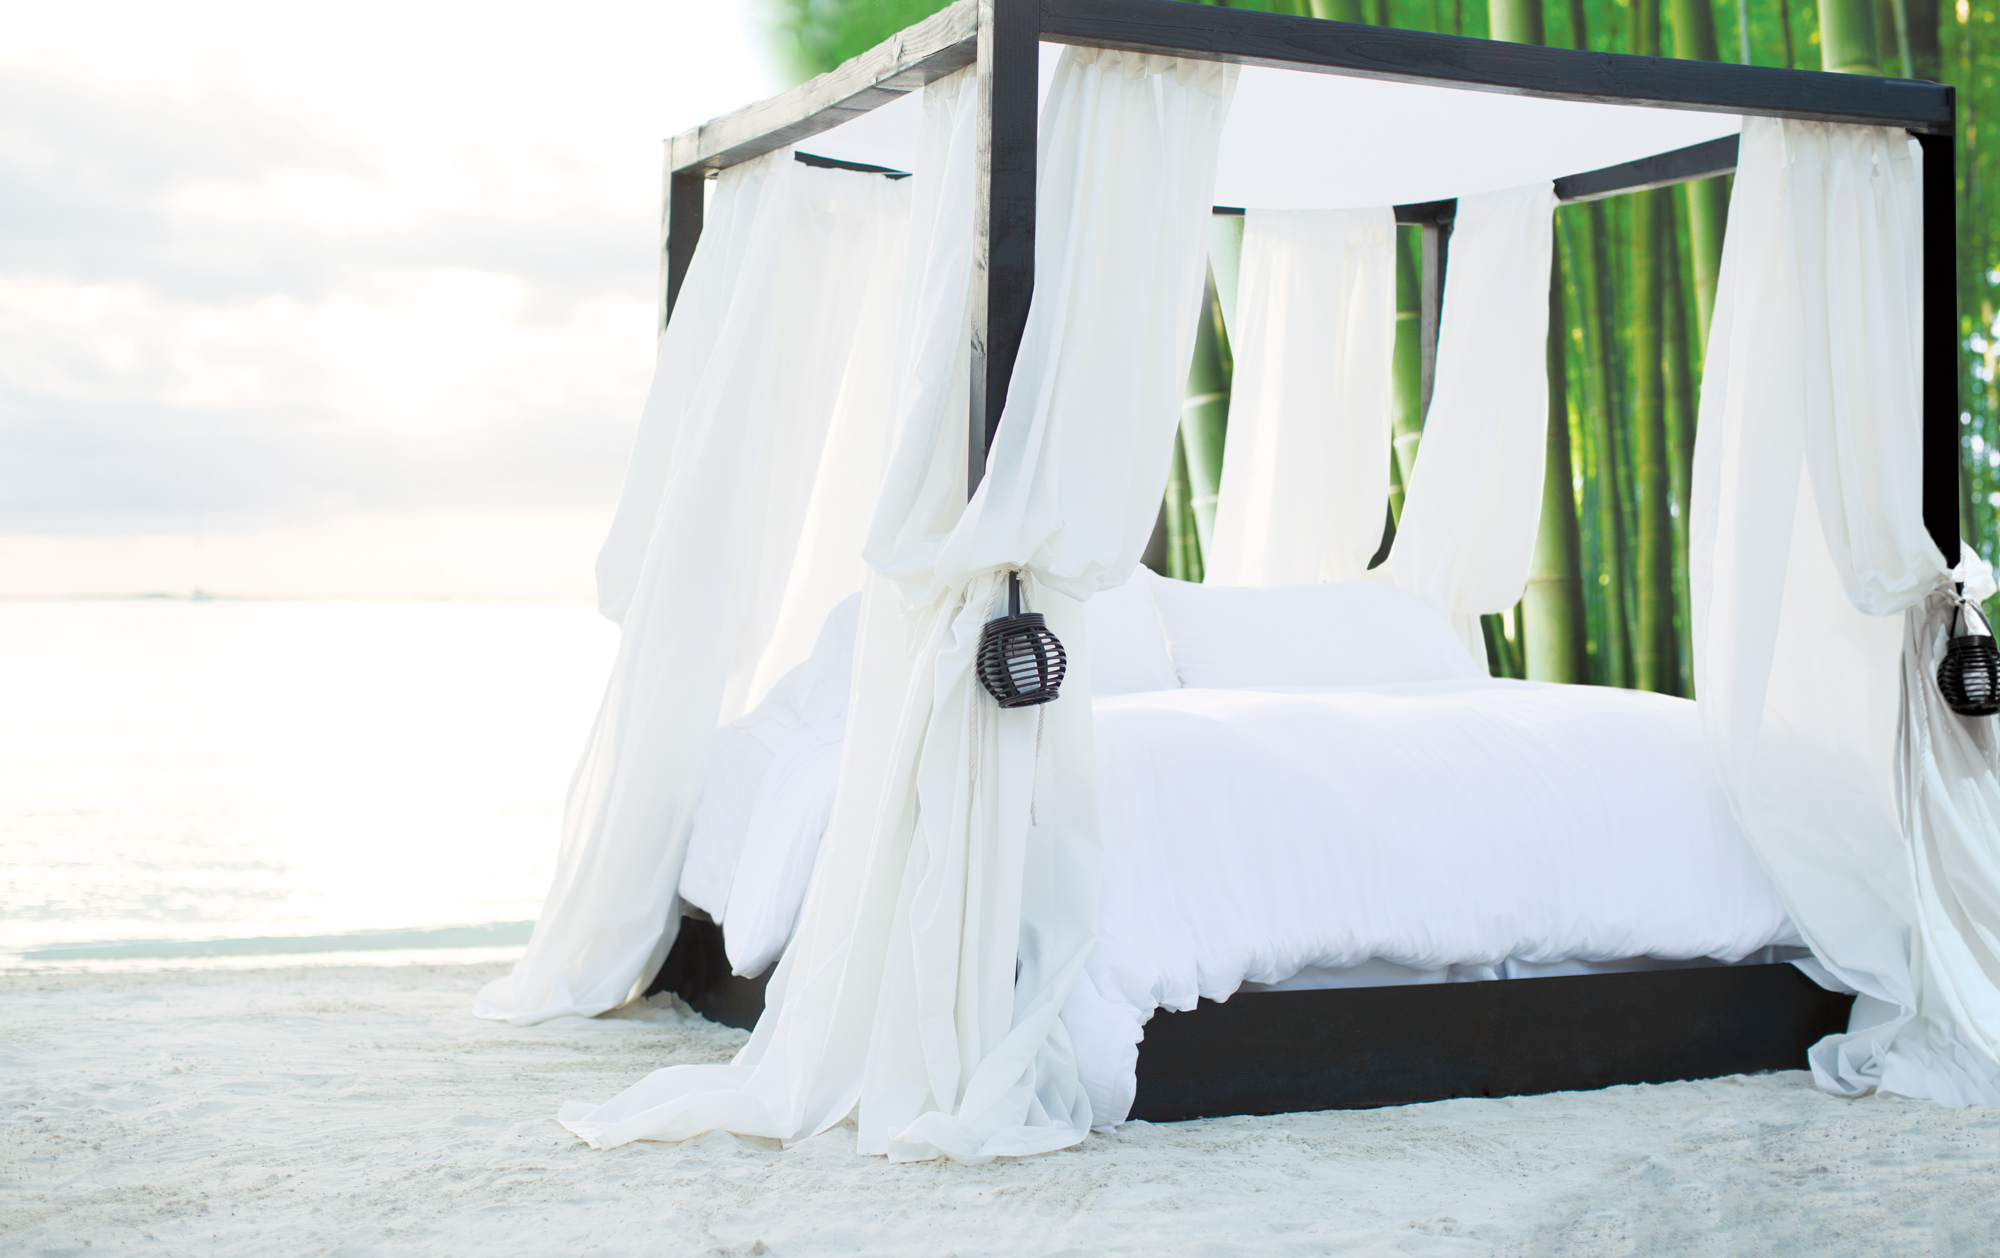 cariloha-bamboo-mattress-bedding